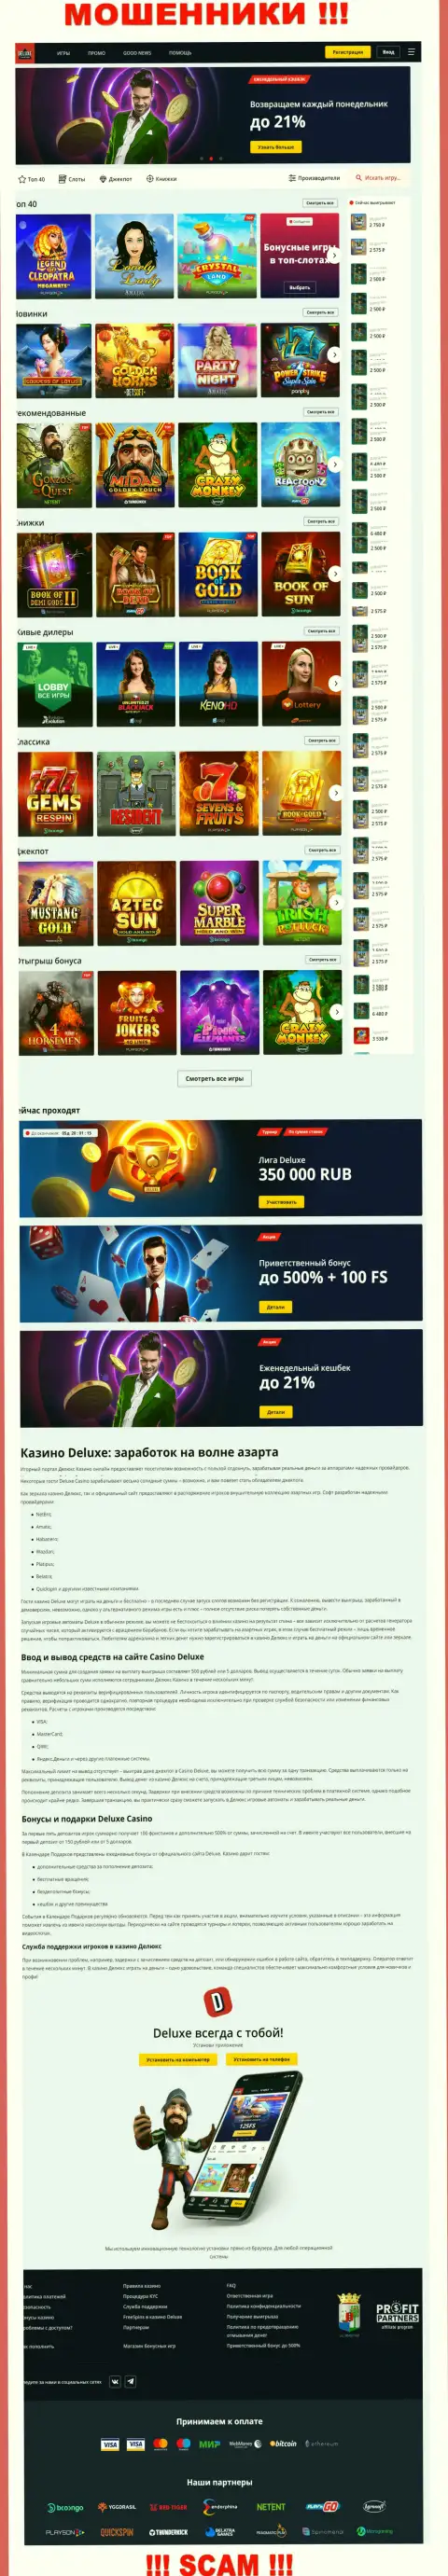 Официальная онлайн-страница компании Deluxe-Casino Com